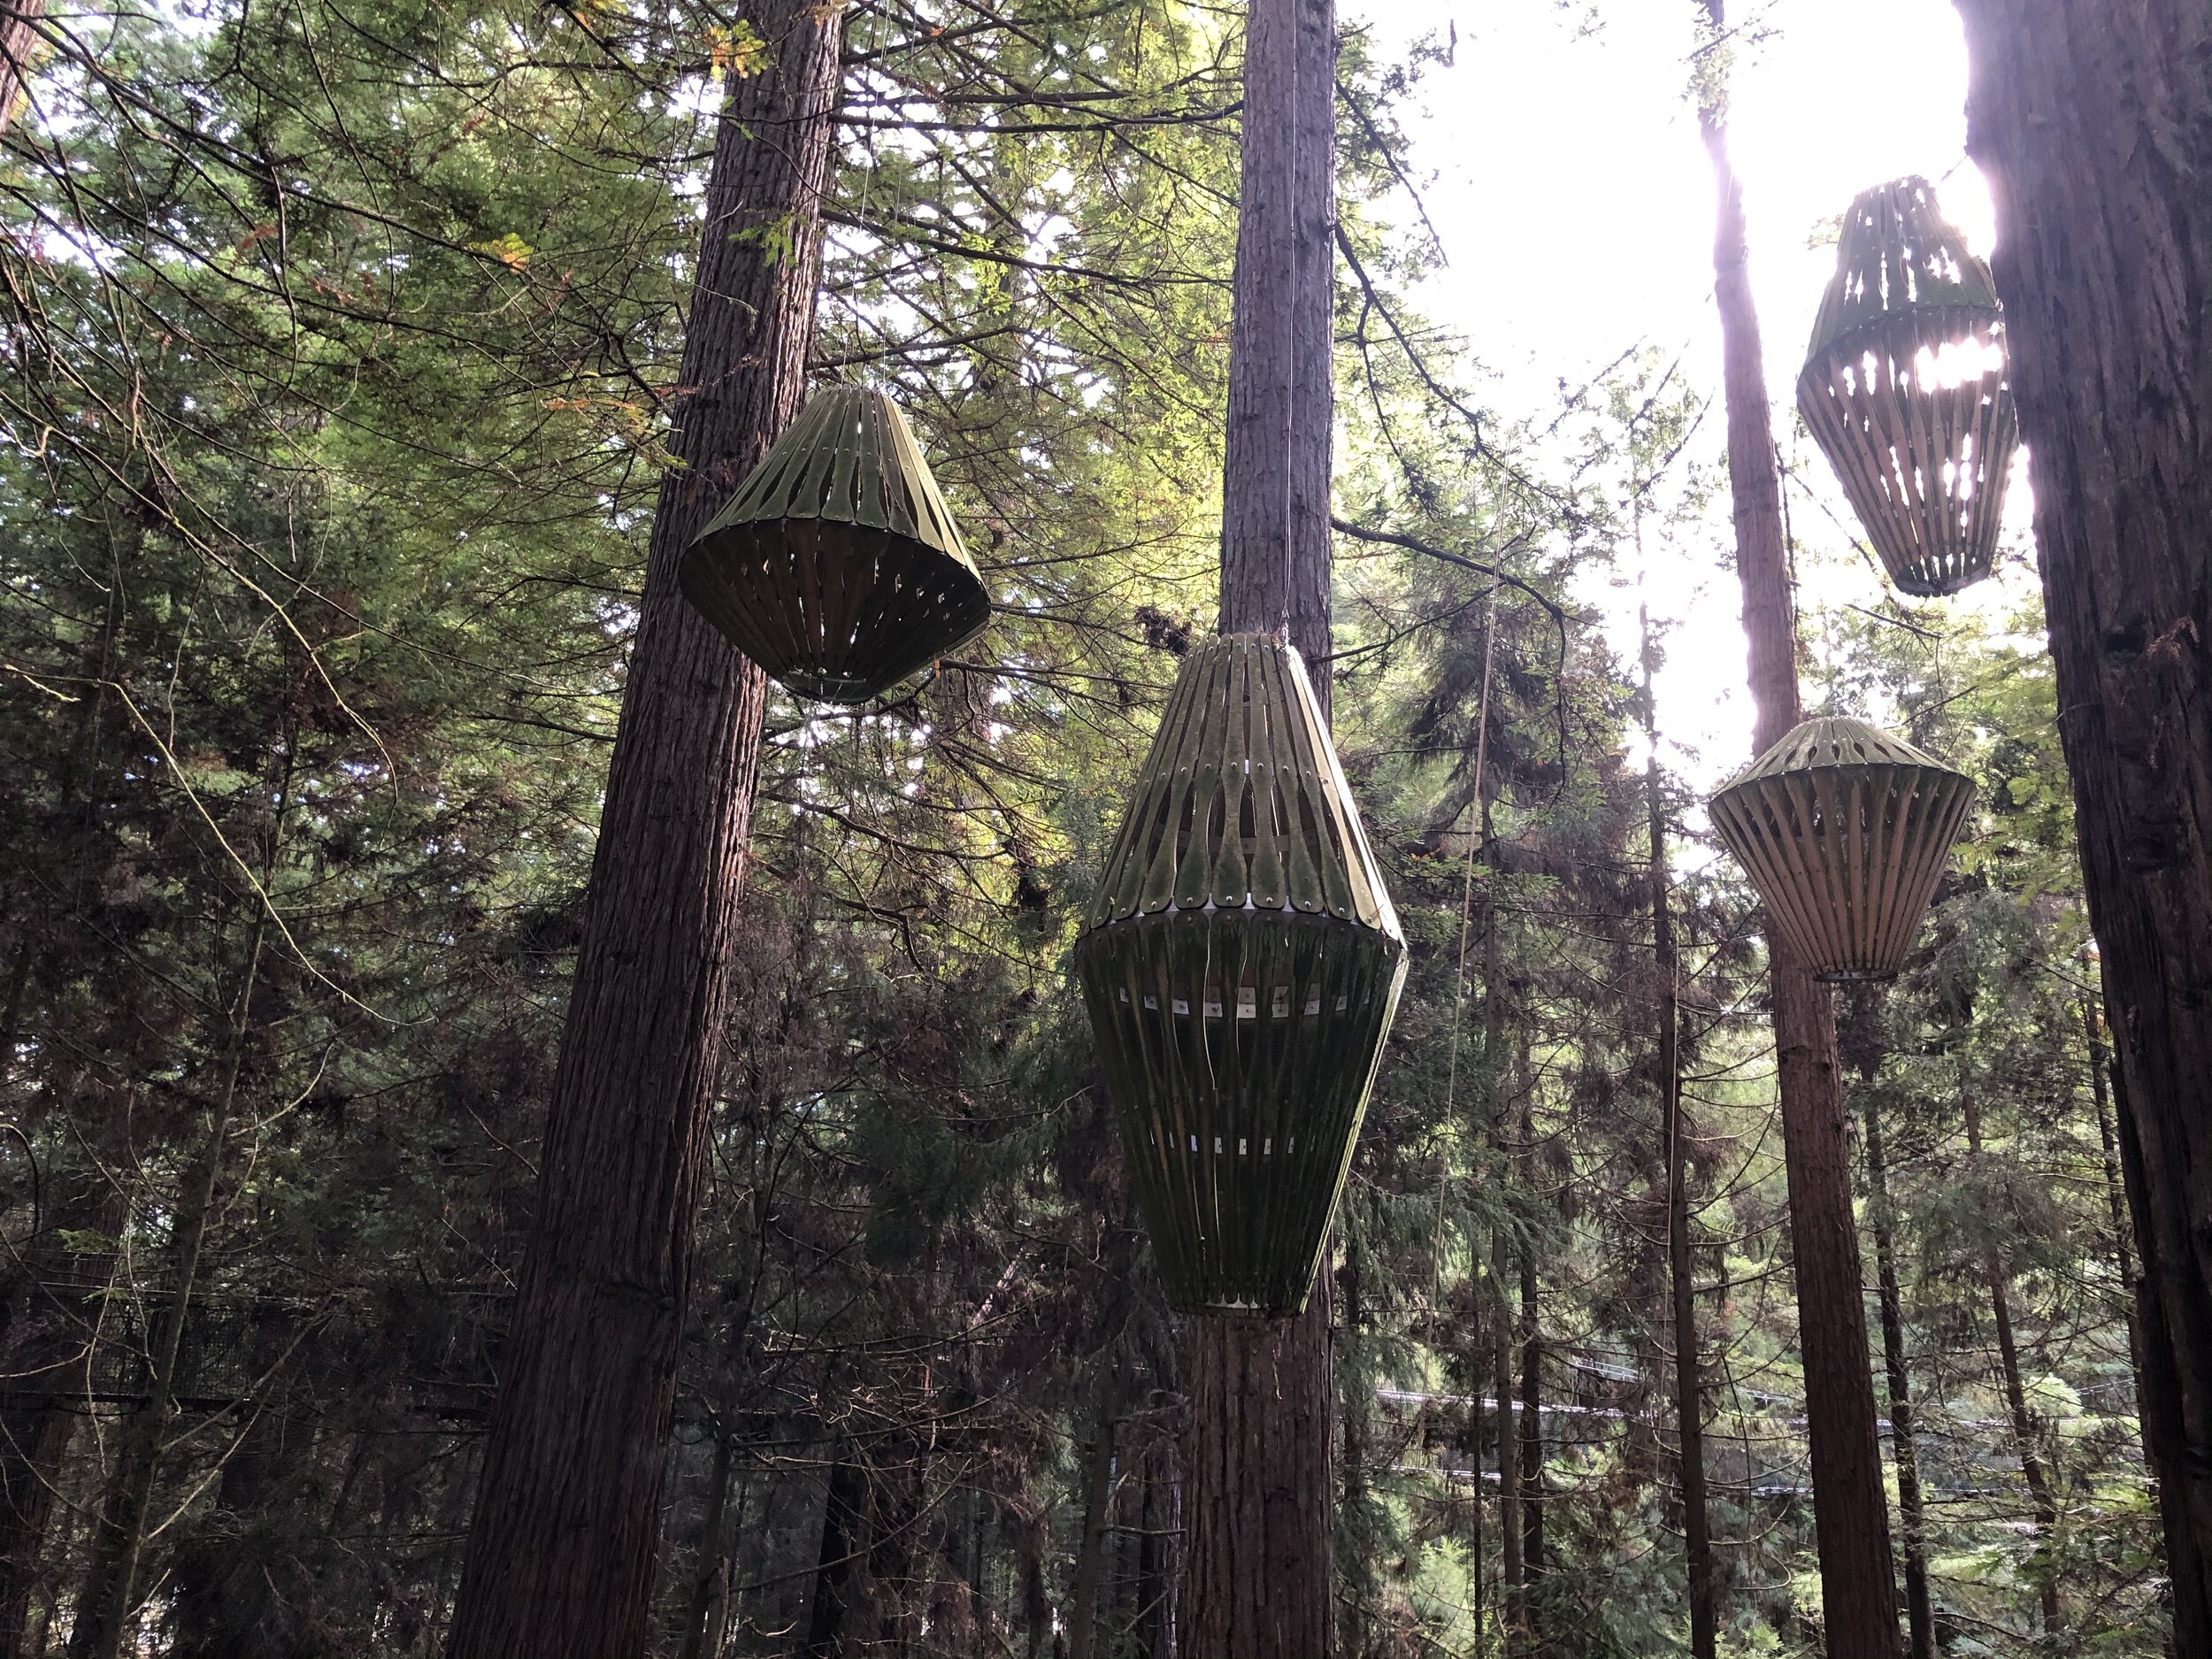 Lanterns designed by David Trubridge